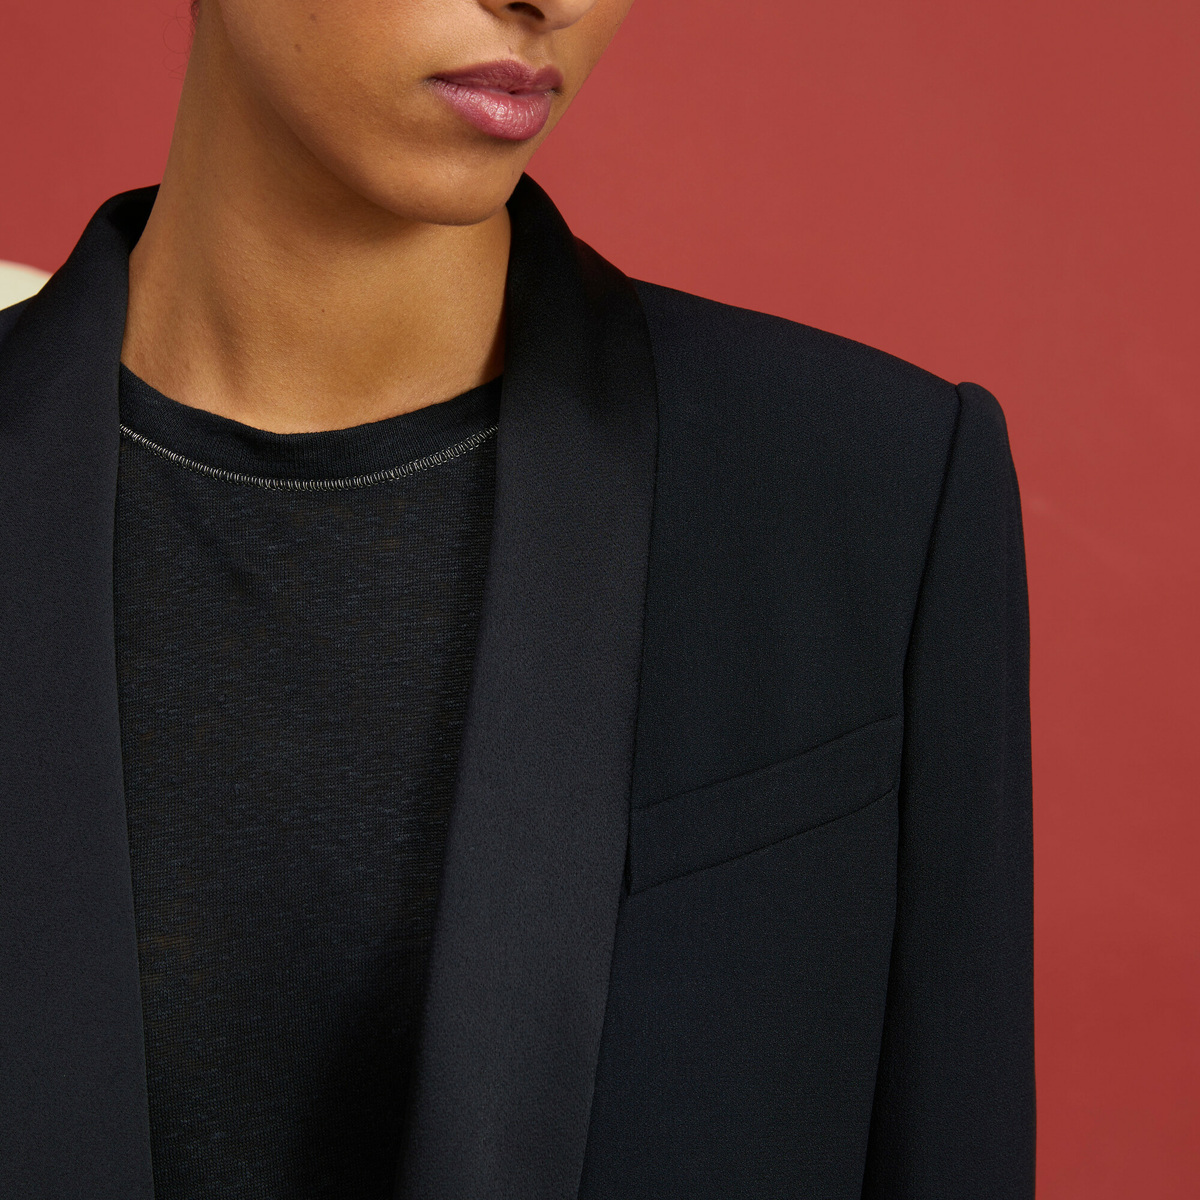 Lina Tee Shirt, Black - Round Neck - 100% Linen - image 2